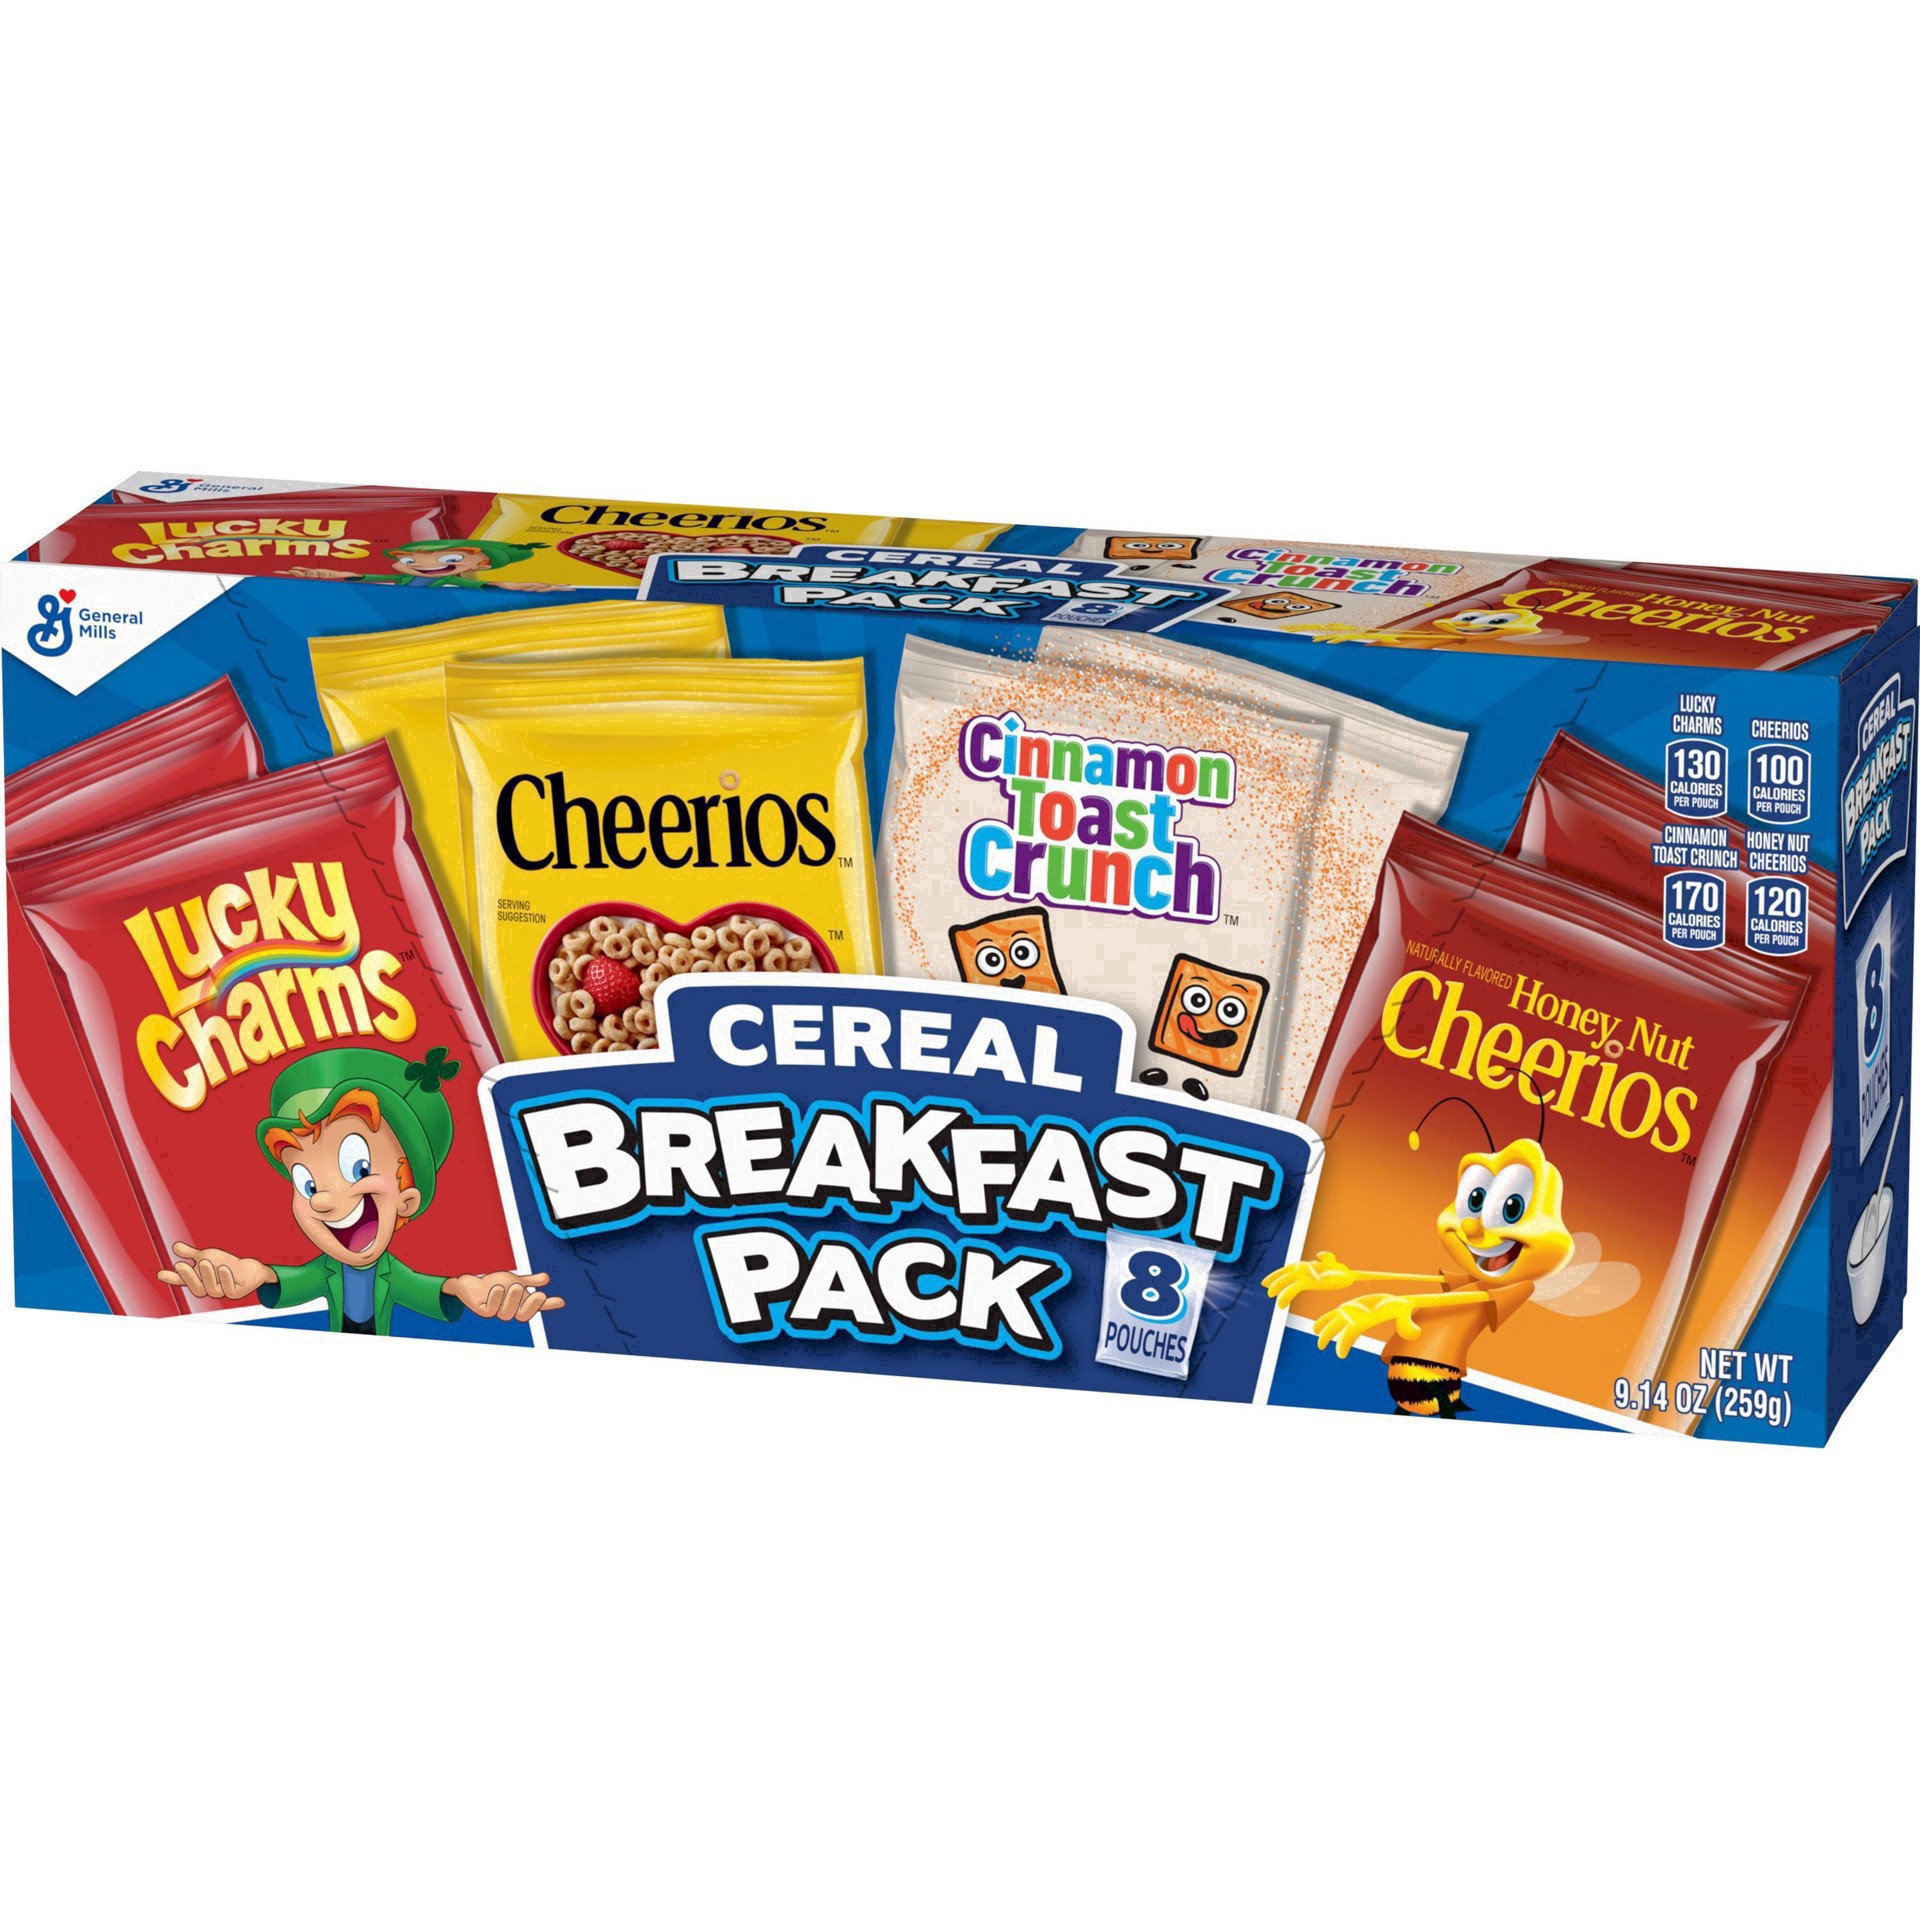 slide 44 of 141, General Mills Breakfast Pack Cereal, 8 ct